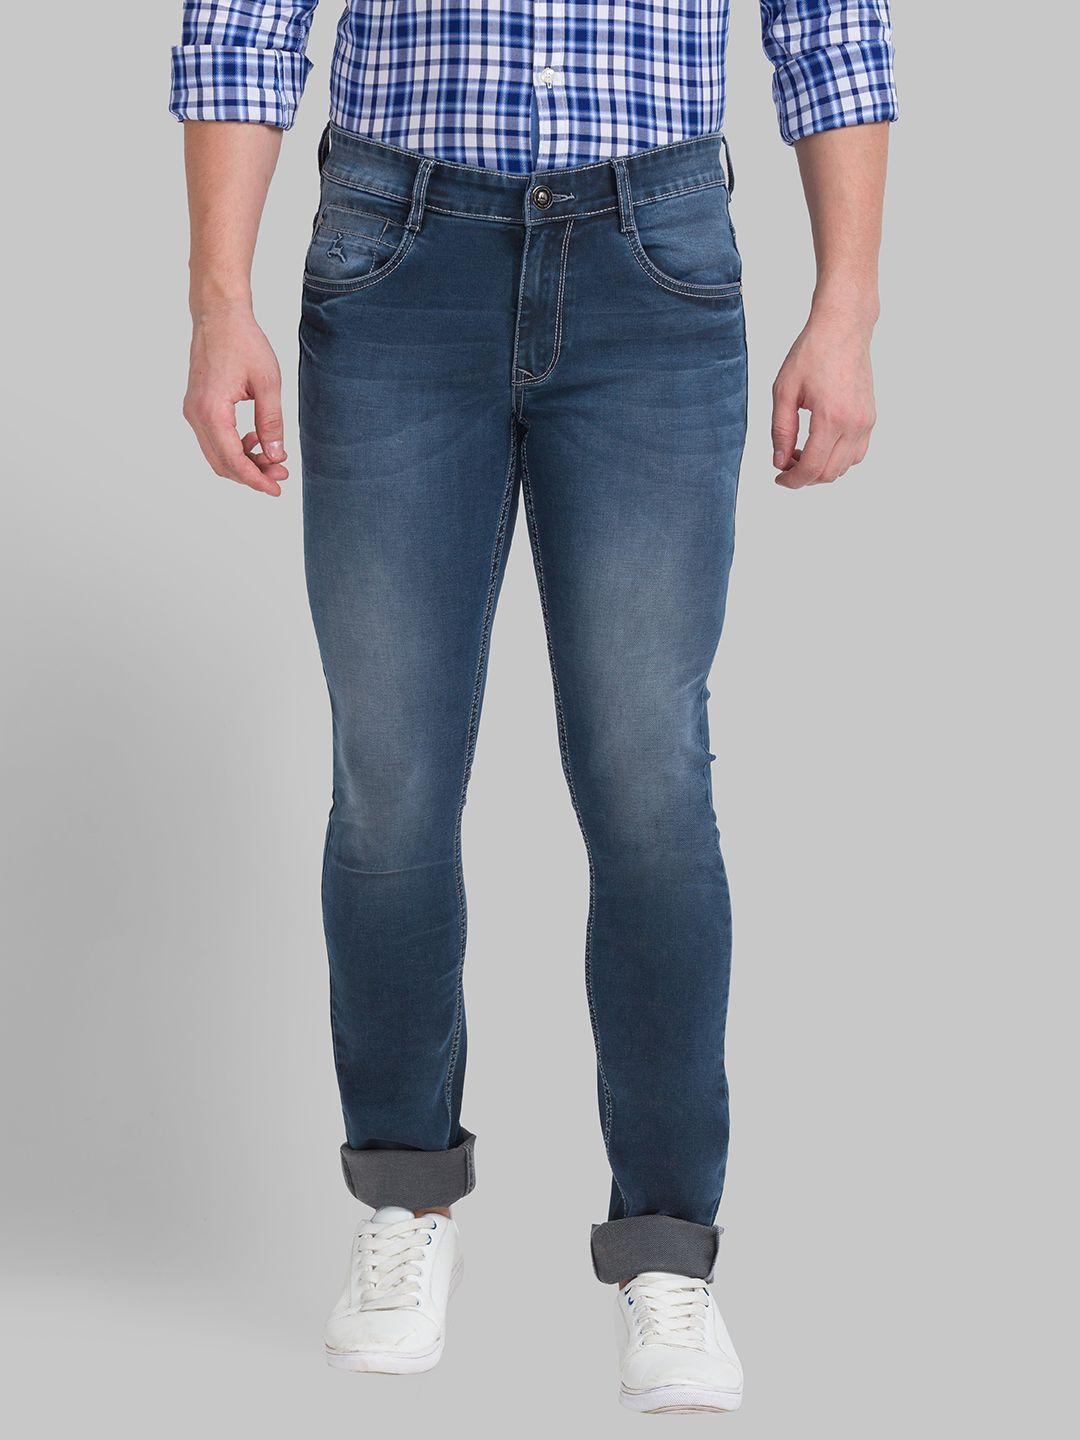 parx men skinny fit highly distressed jeans